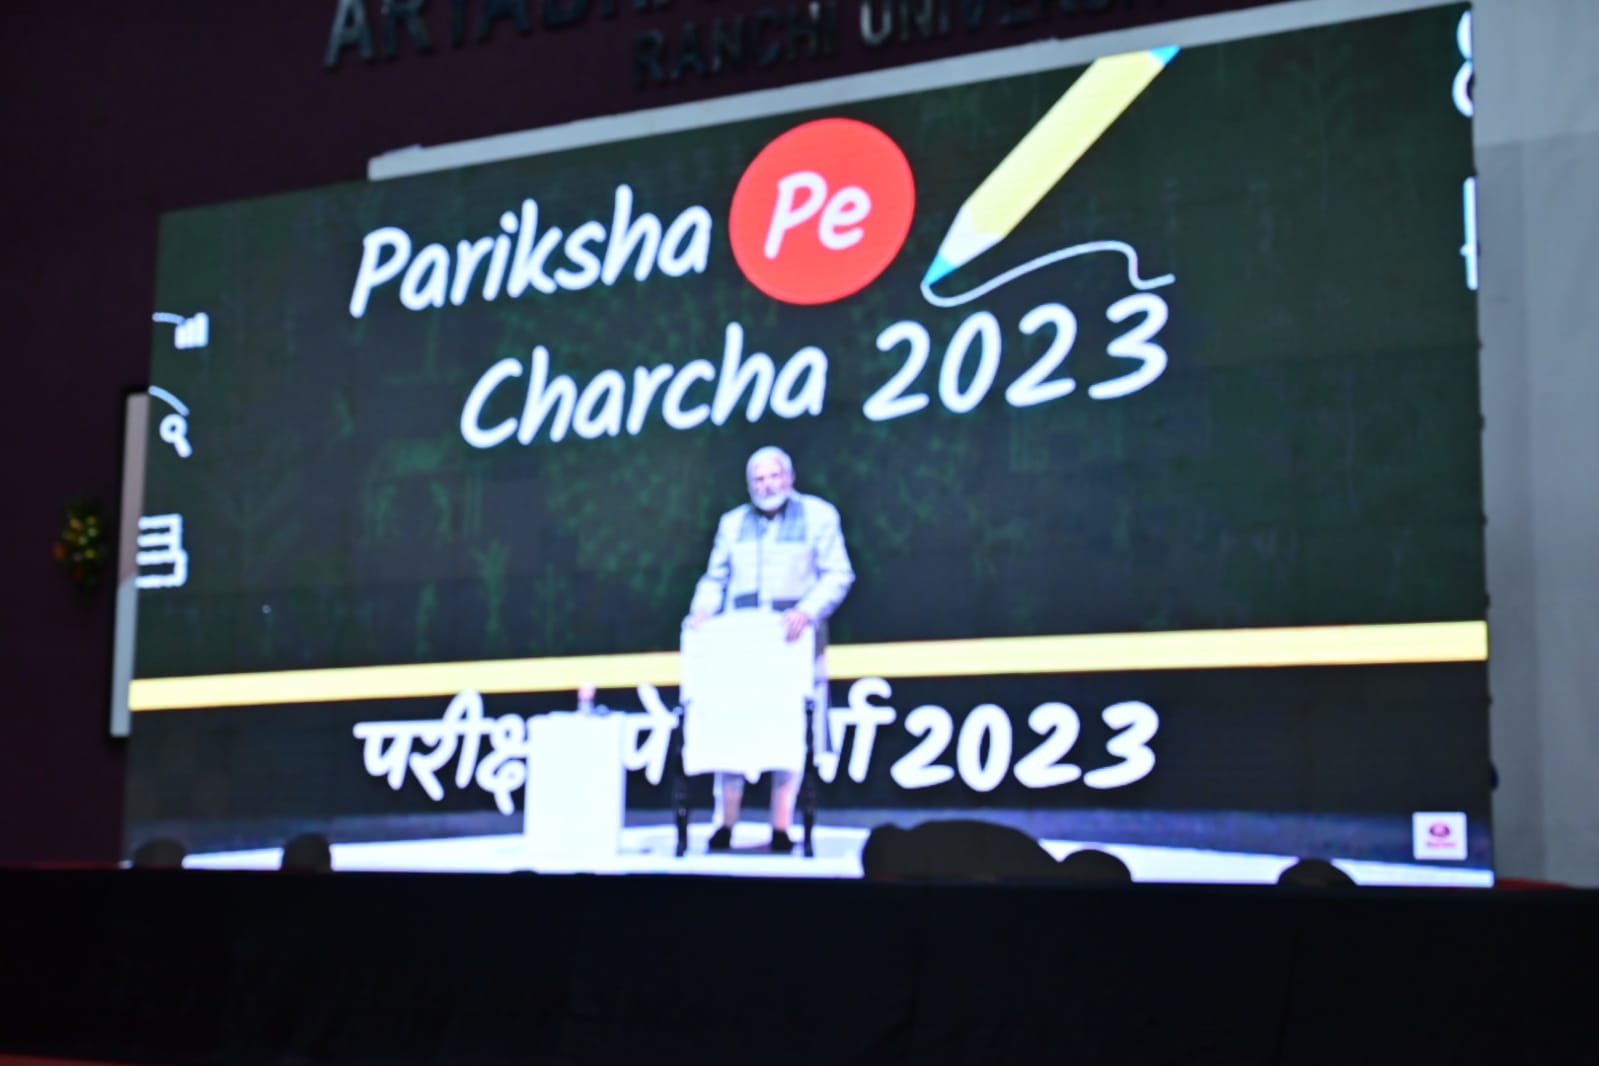 राज्यपाल रमेश बैस प्रधानमंत्री नरेन्द्र मोदी के ''परीक्षा पे चर्चा कार्यक्रम में हुए शामिल - Governor Ramesh Bais participated in Prime Minister Narendra Modi's "Pariksha Pe Charcha" program